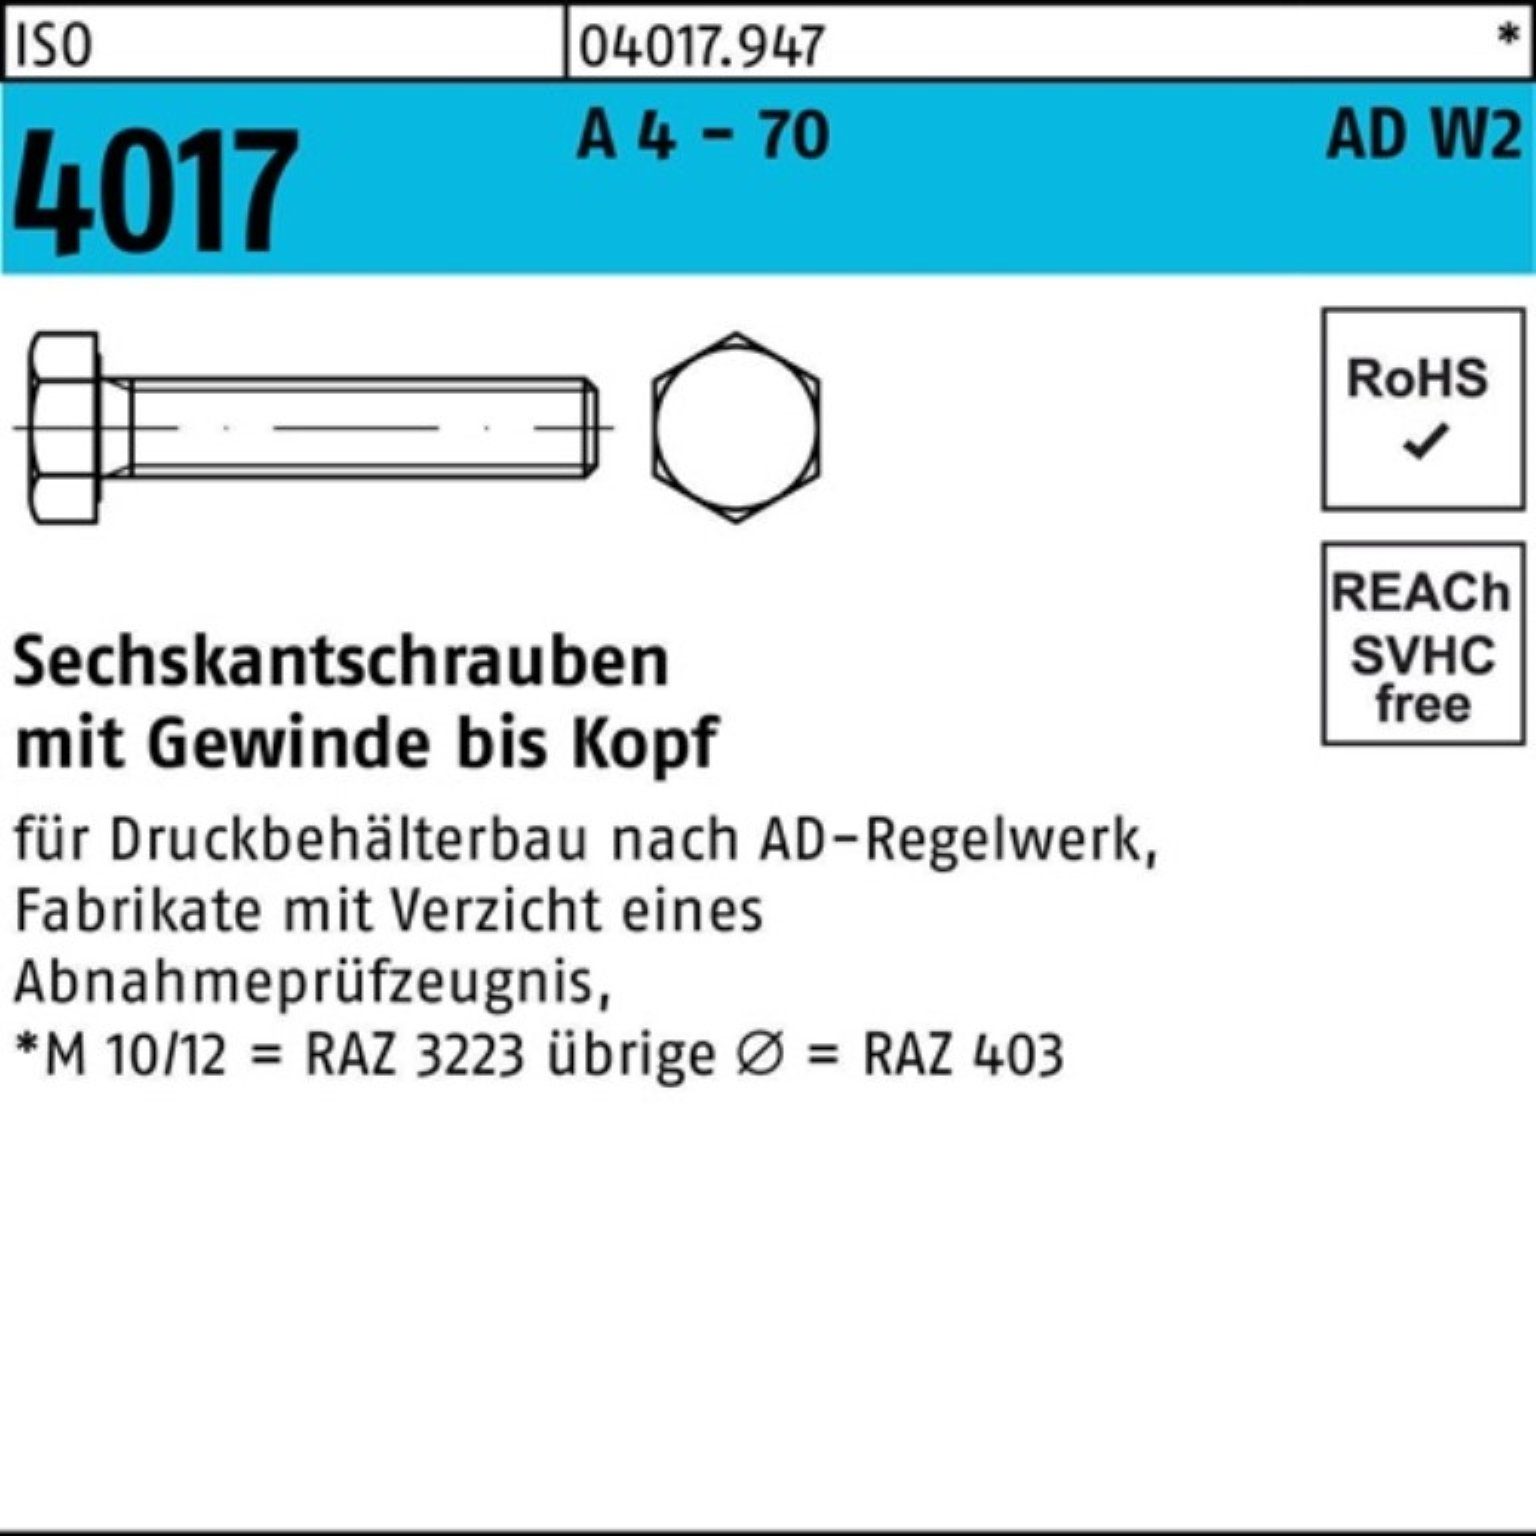 Bufab Sechskantschraube 100er Pack Sechskantschraube ISO 4017 VG M12x 60 A 4 - 70 AD-W2 50 St